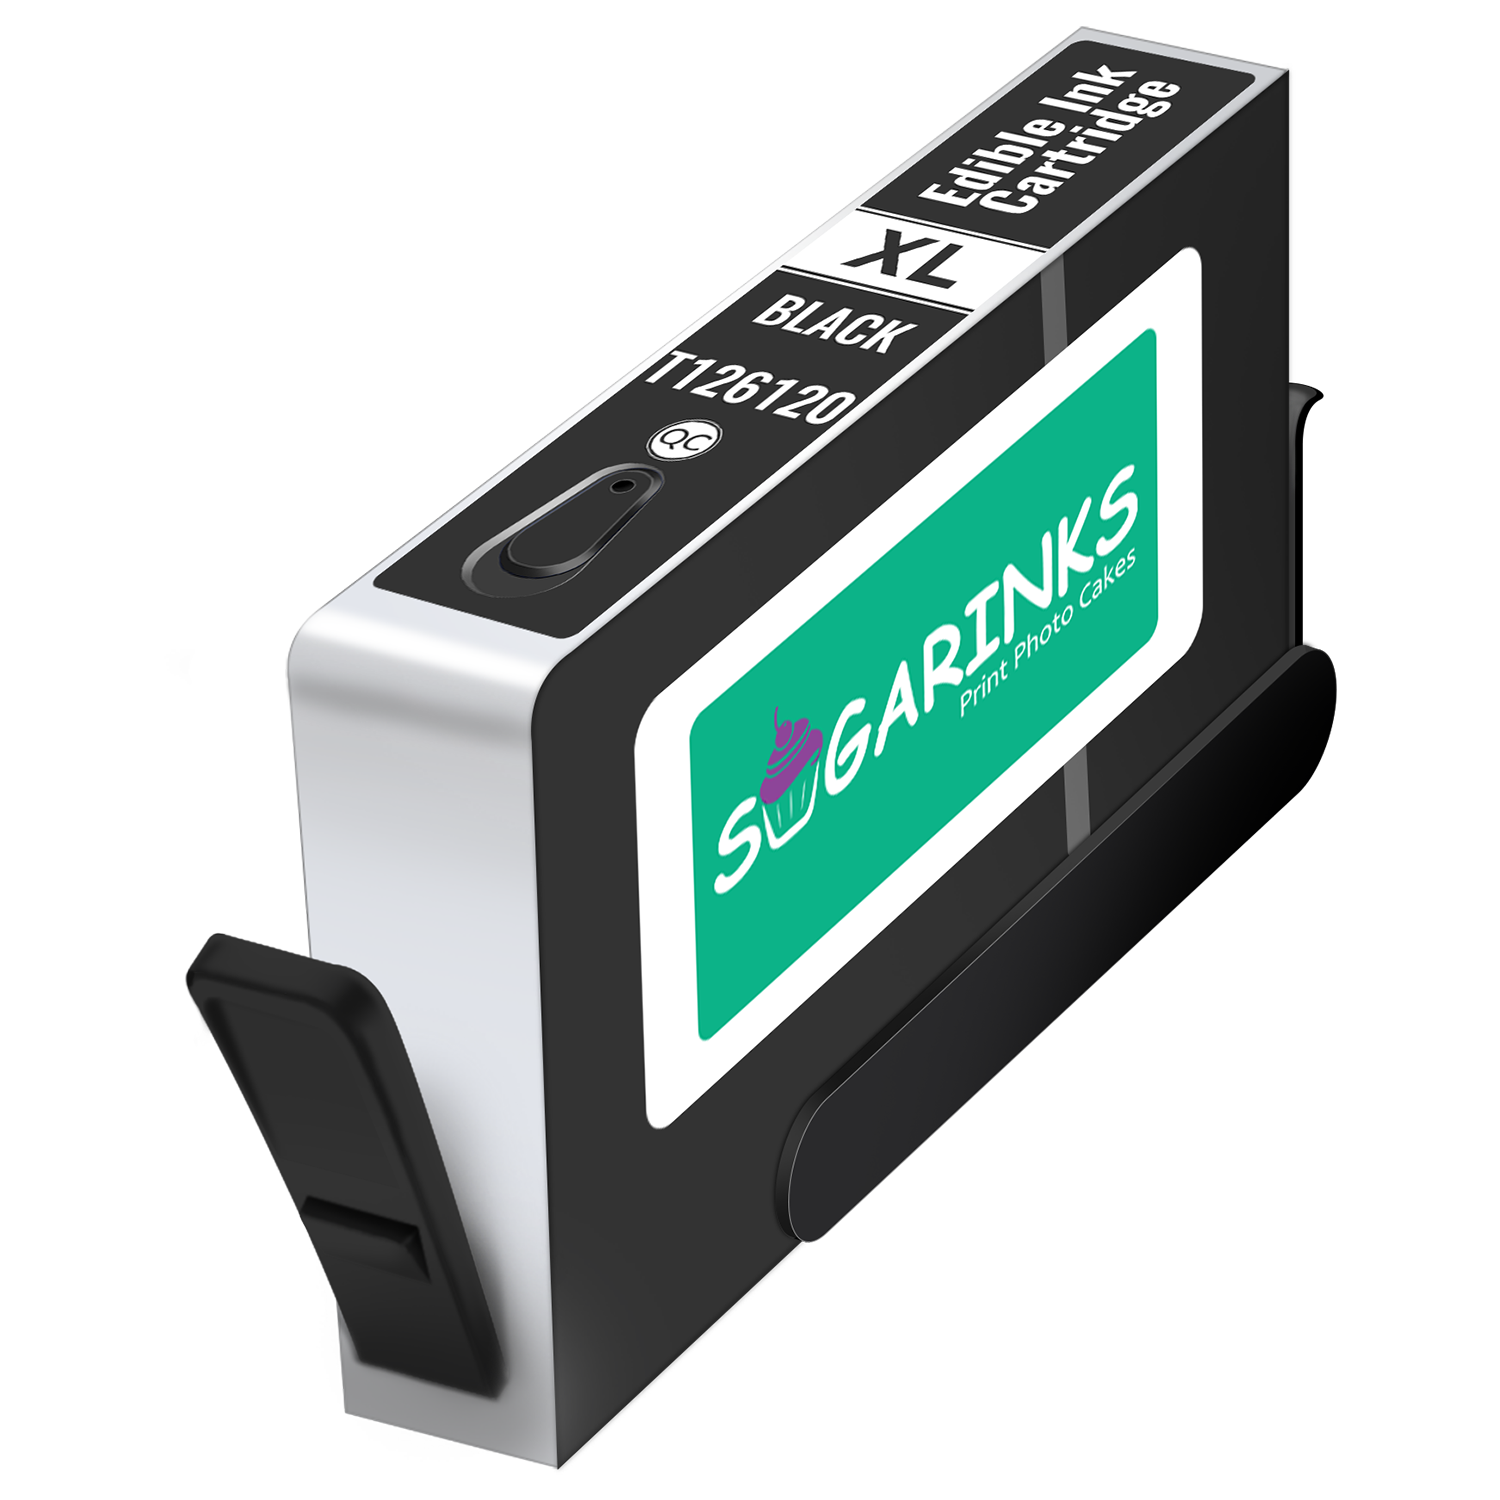 Sugarinks Edible Ink Cartridges T126120 for Epson Edible Printers – Black 